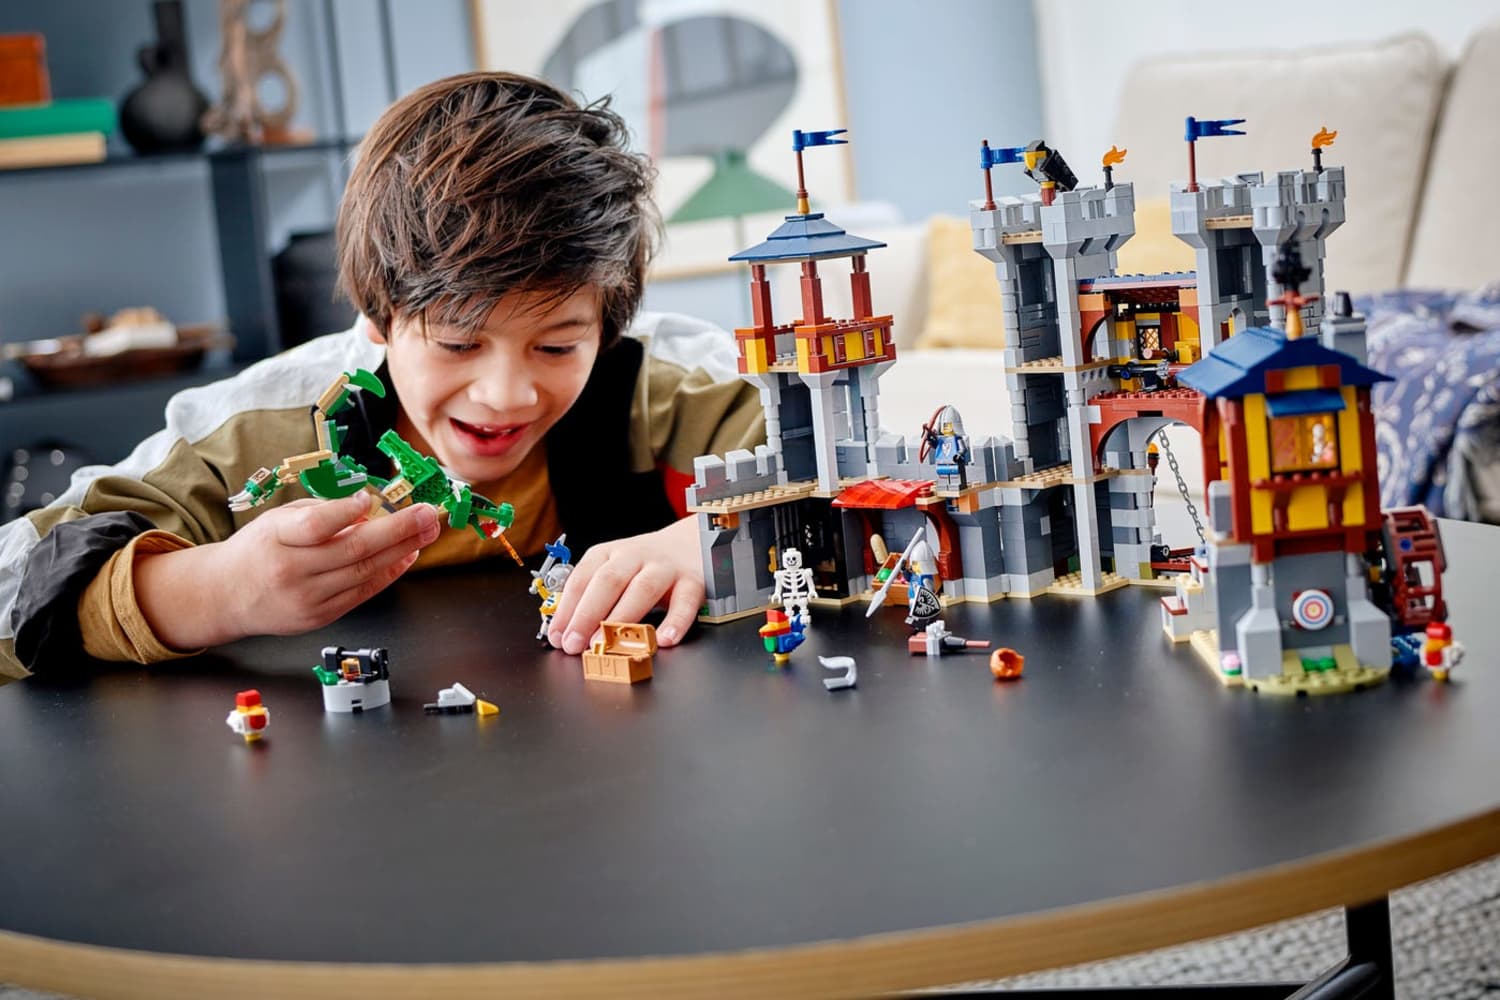 Lego Storage Brick 3-Piece Multi-Pack